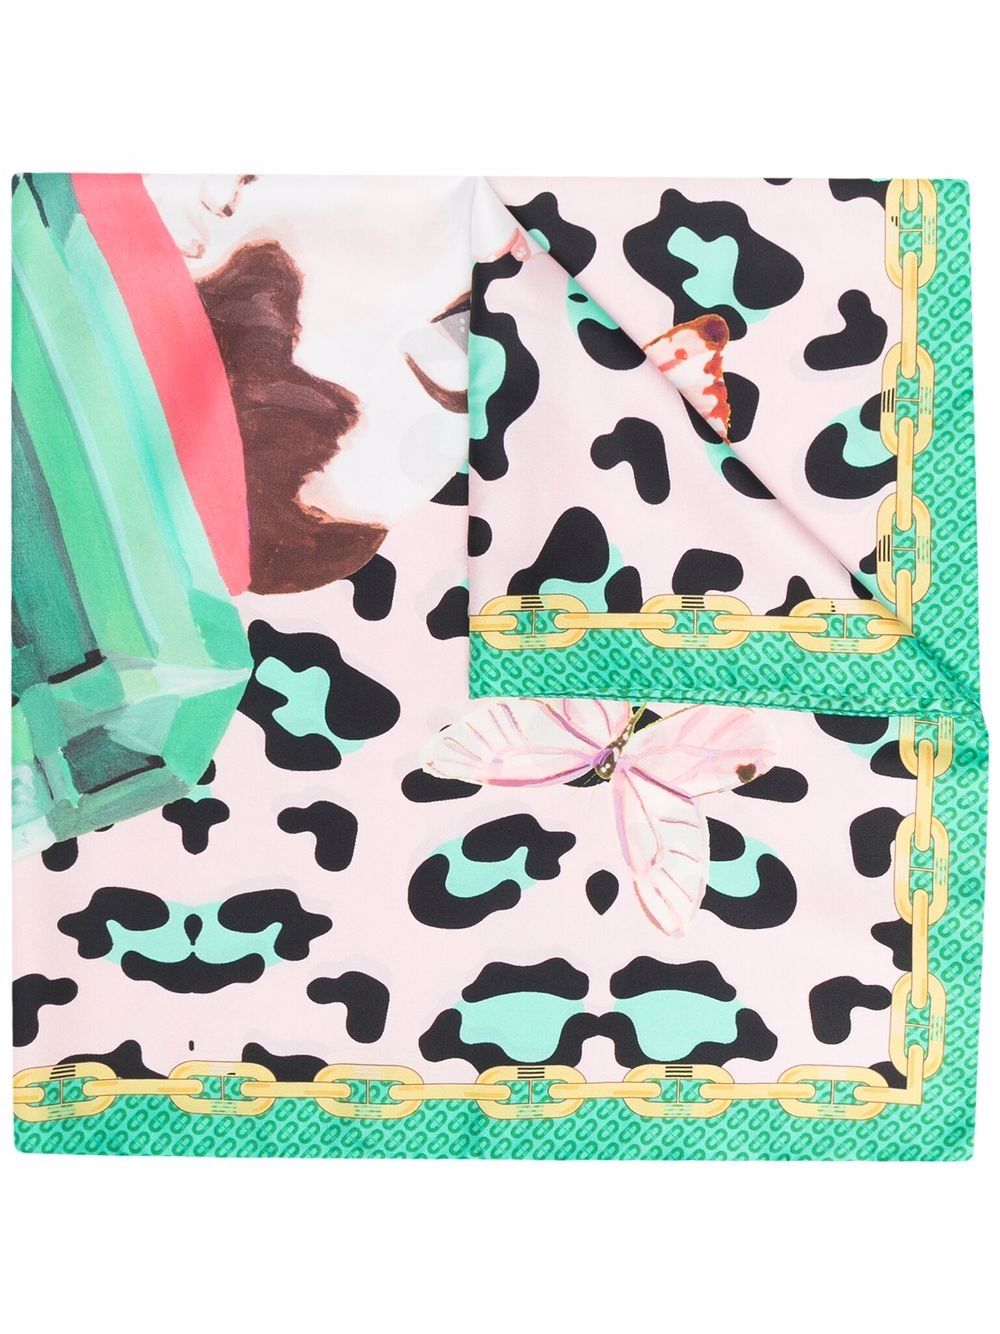 фото Dee ocleppo платок с леопардовым принтом